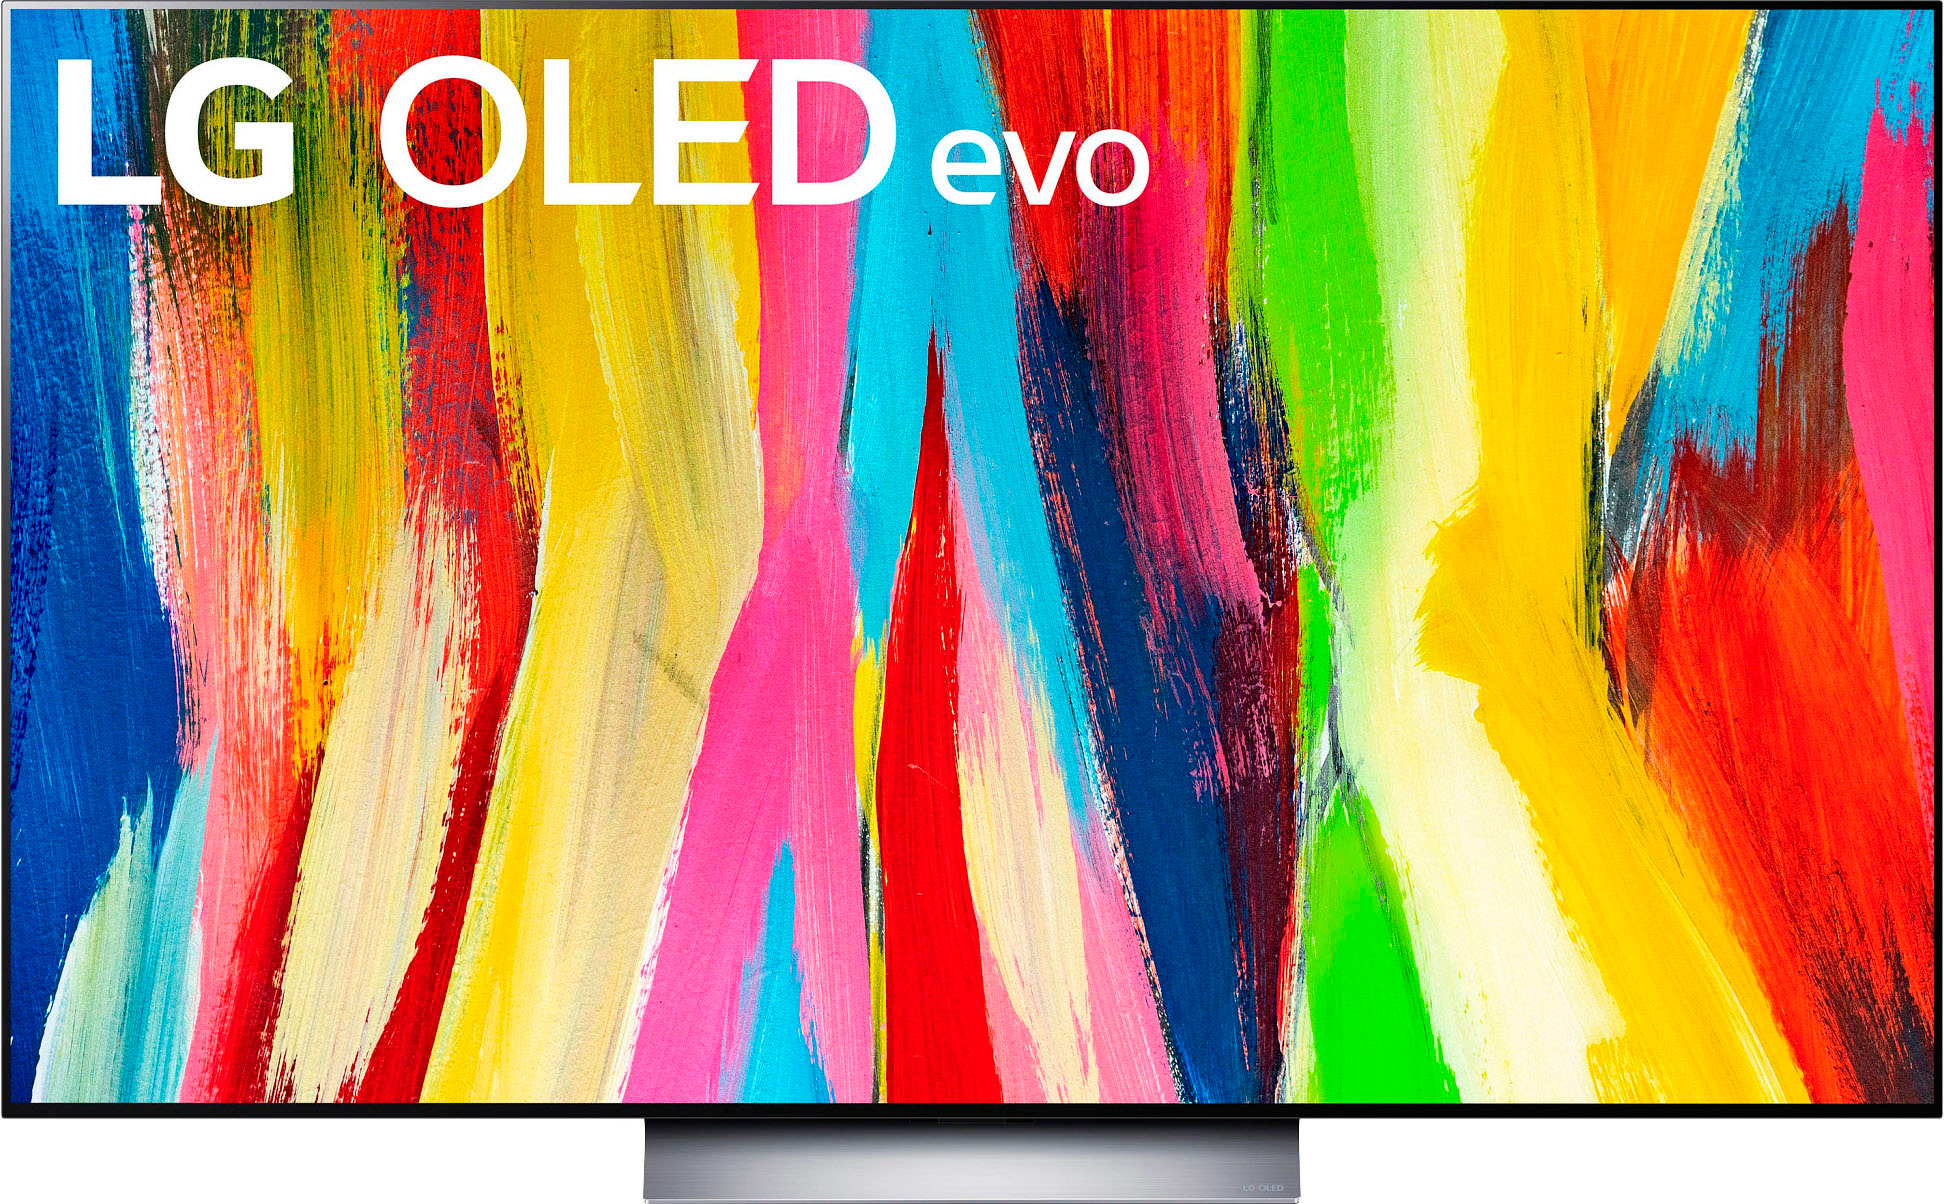 LG 55 Class C1 Series OLED 4K UHD Smart webOS TV OLED55C1PUB - Best Buy